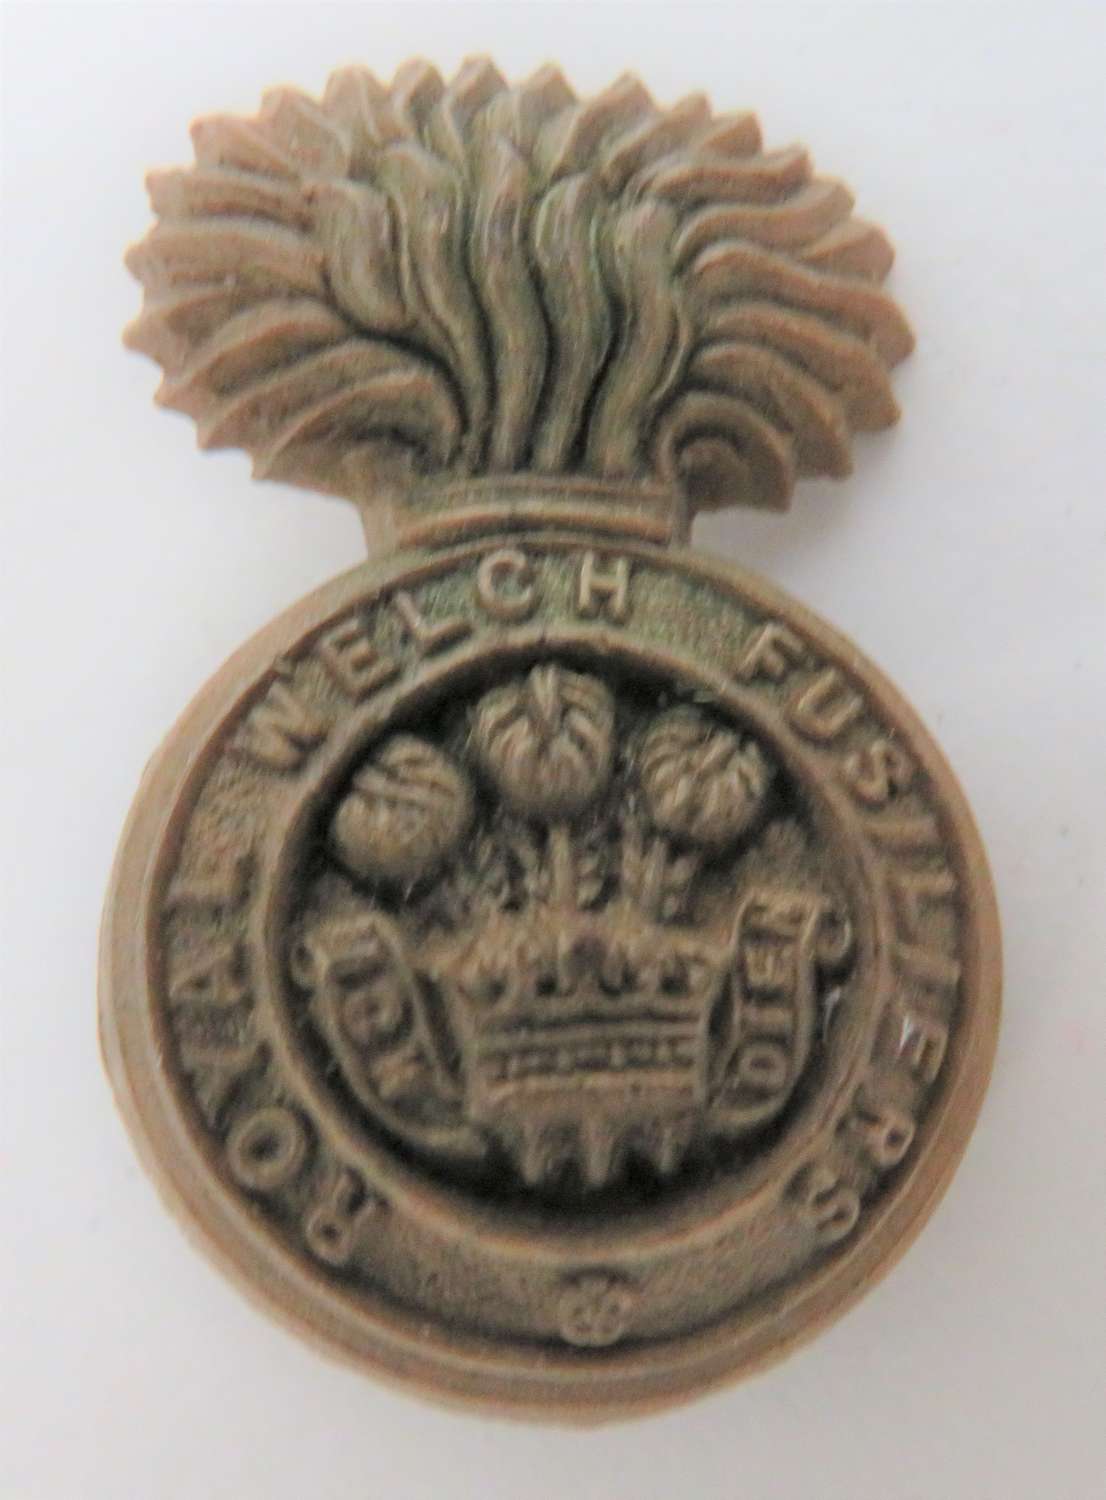 WW2 Plastic Economy Royal Welch Fusiliers Cap Badge